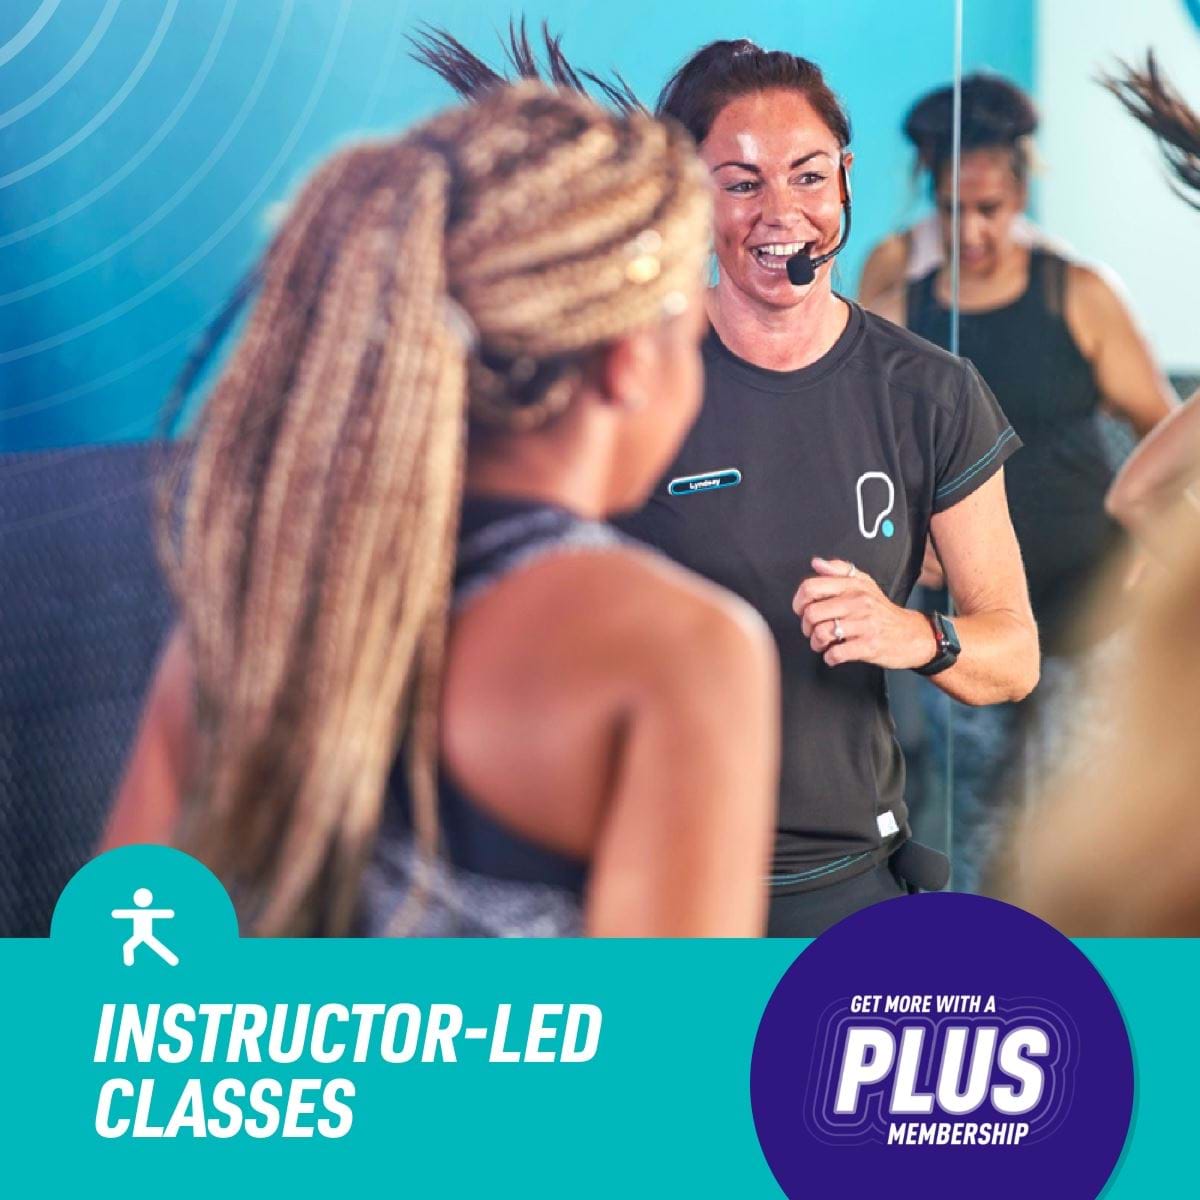 Instructor-led classes